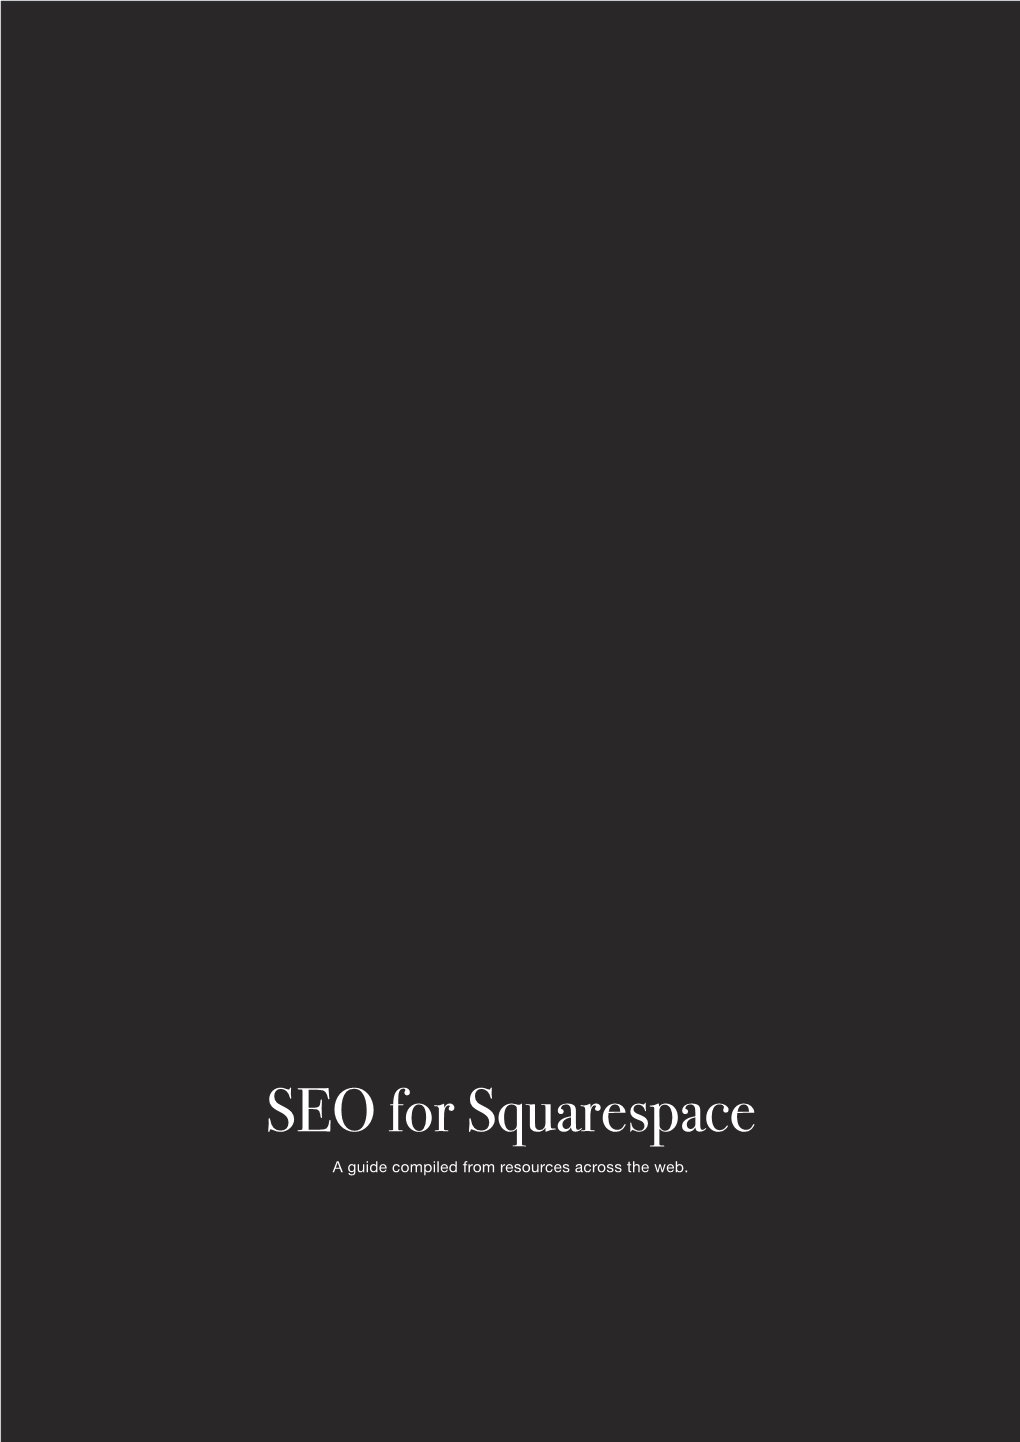 SEO for Squarespace